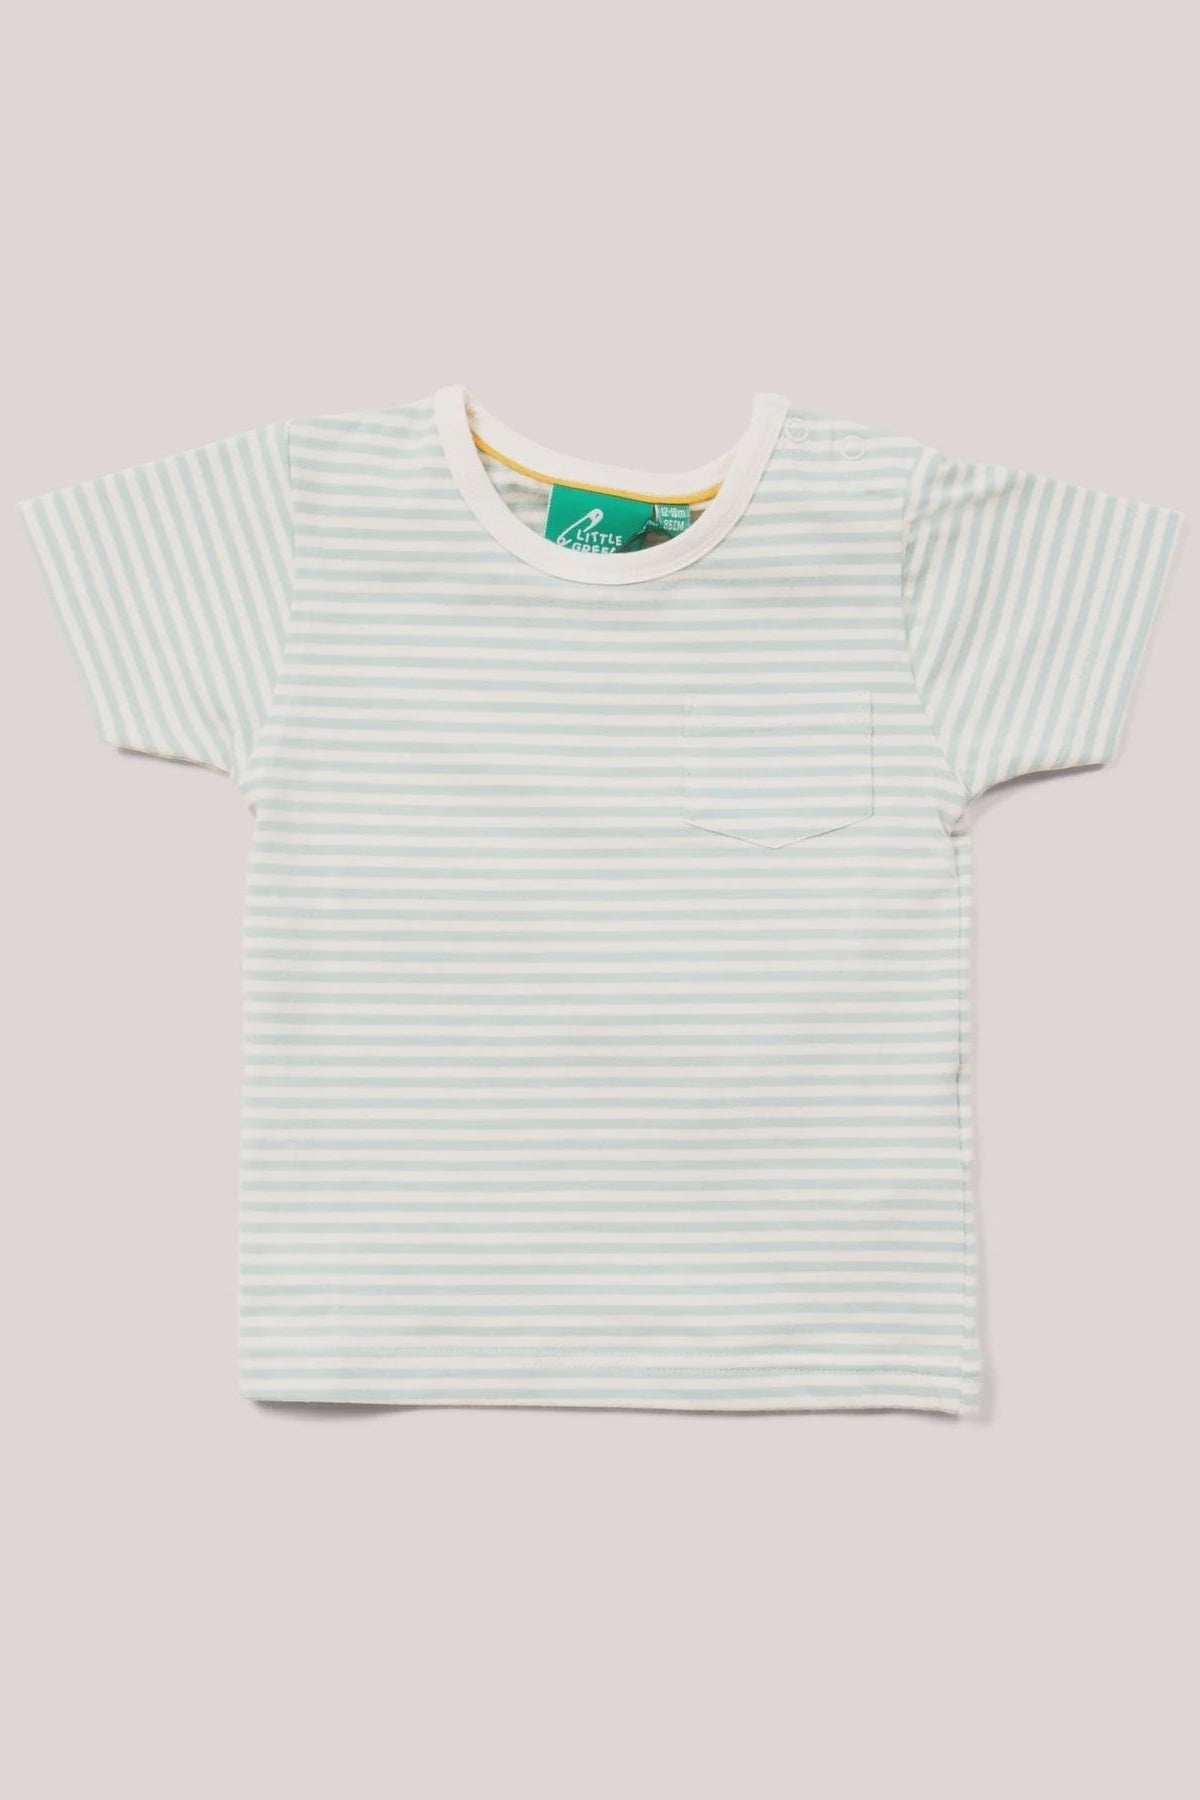 Little Green Radicals Blue Striped Organic Short Sleeve T-Shirt - Powder Blue Stripe-Kids-Ohh! By Gum - Shop Sustainable